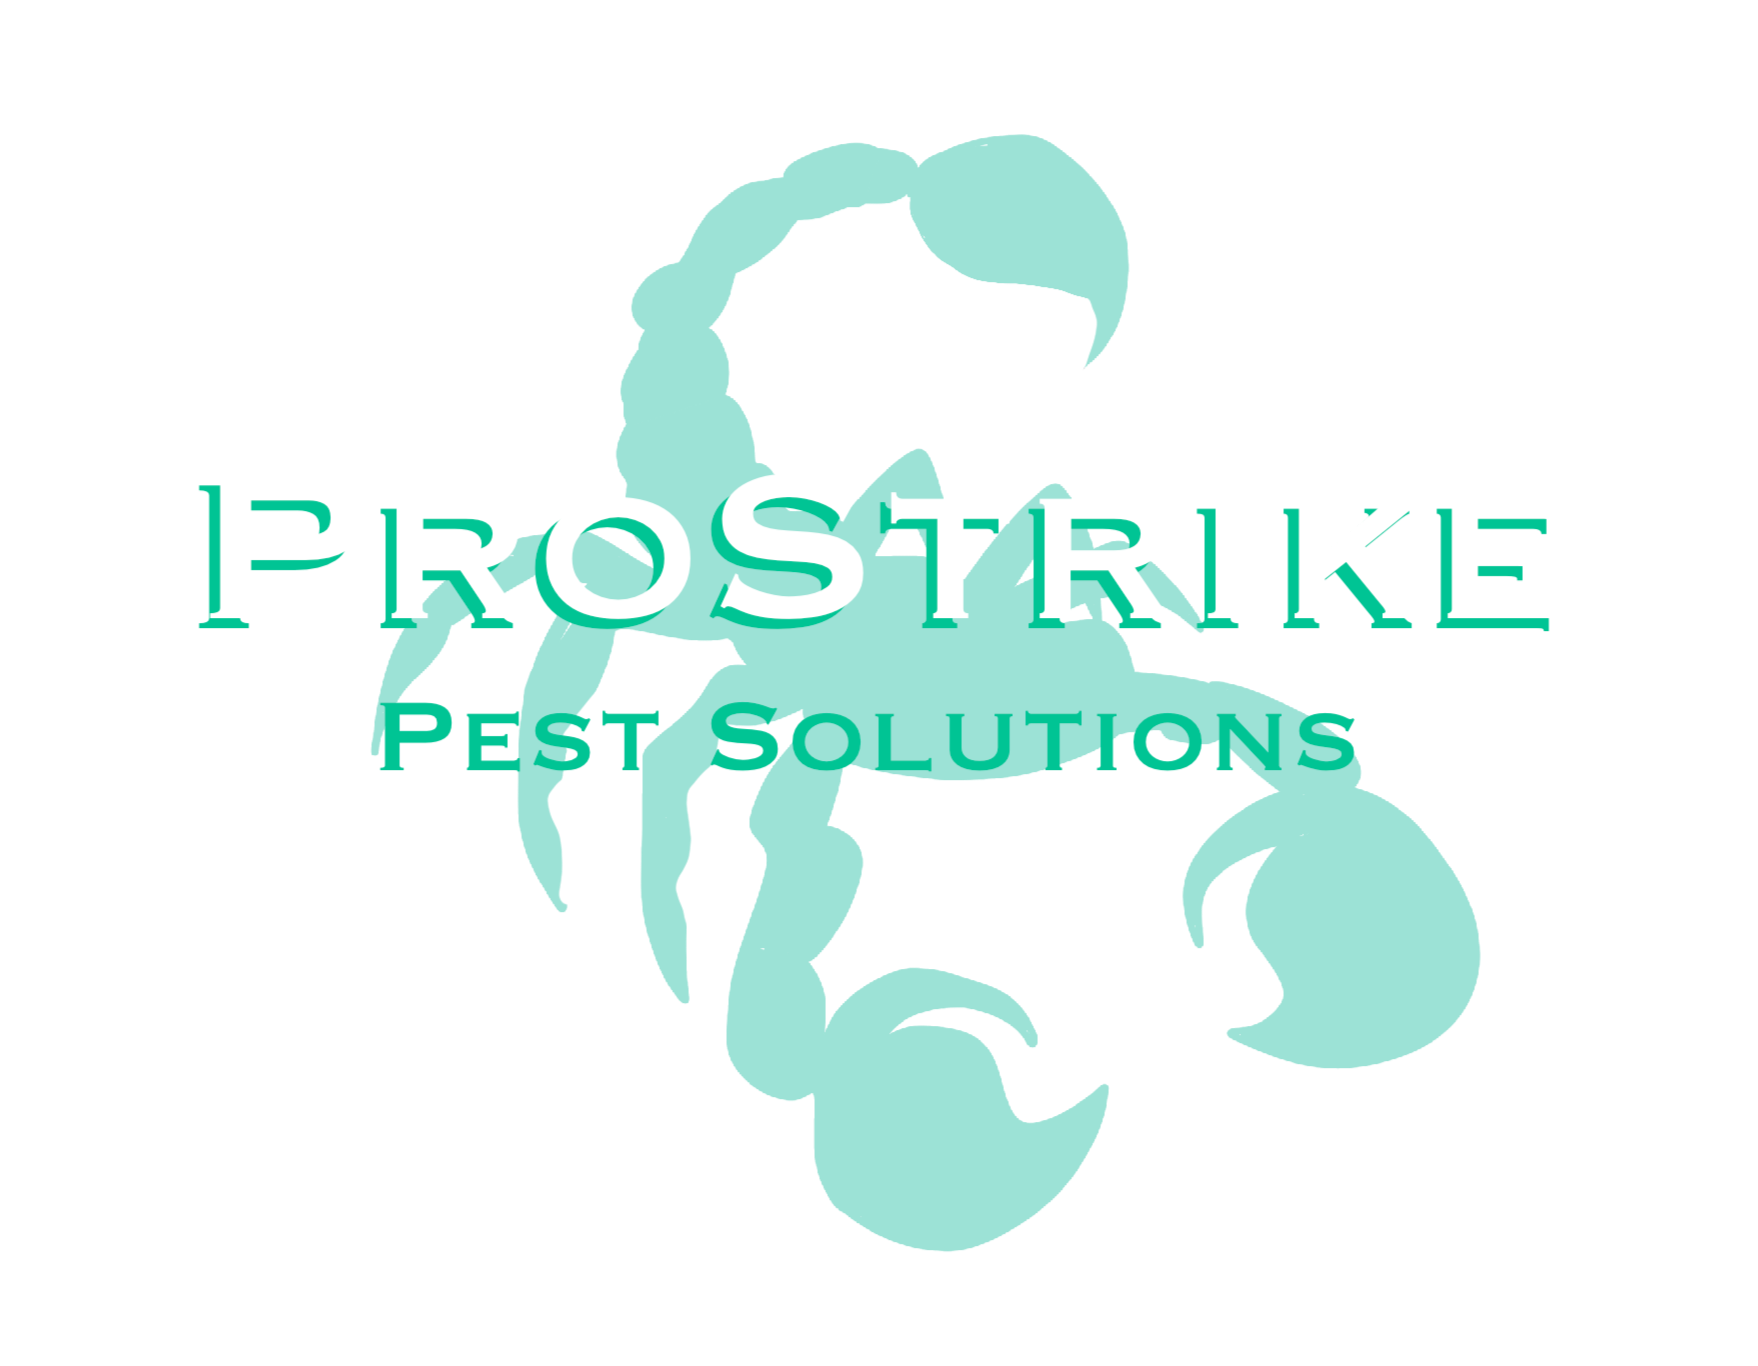 ProStrikePest Solutions